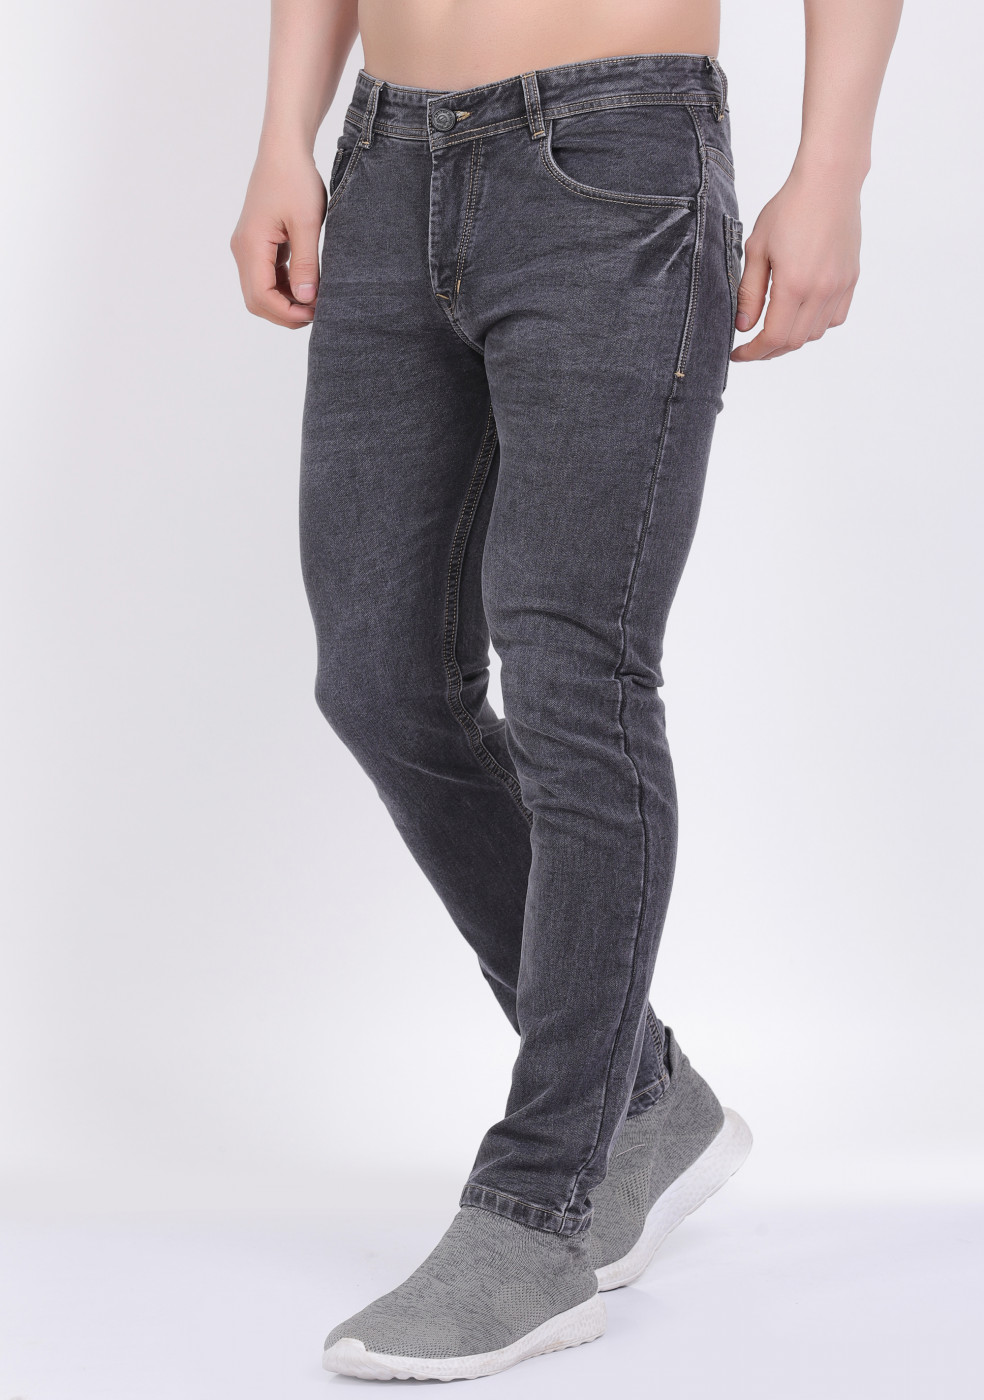 Gray Stretchable Denim Jeans For Men